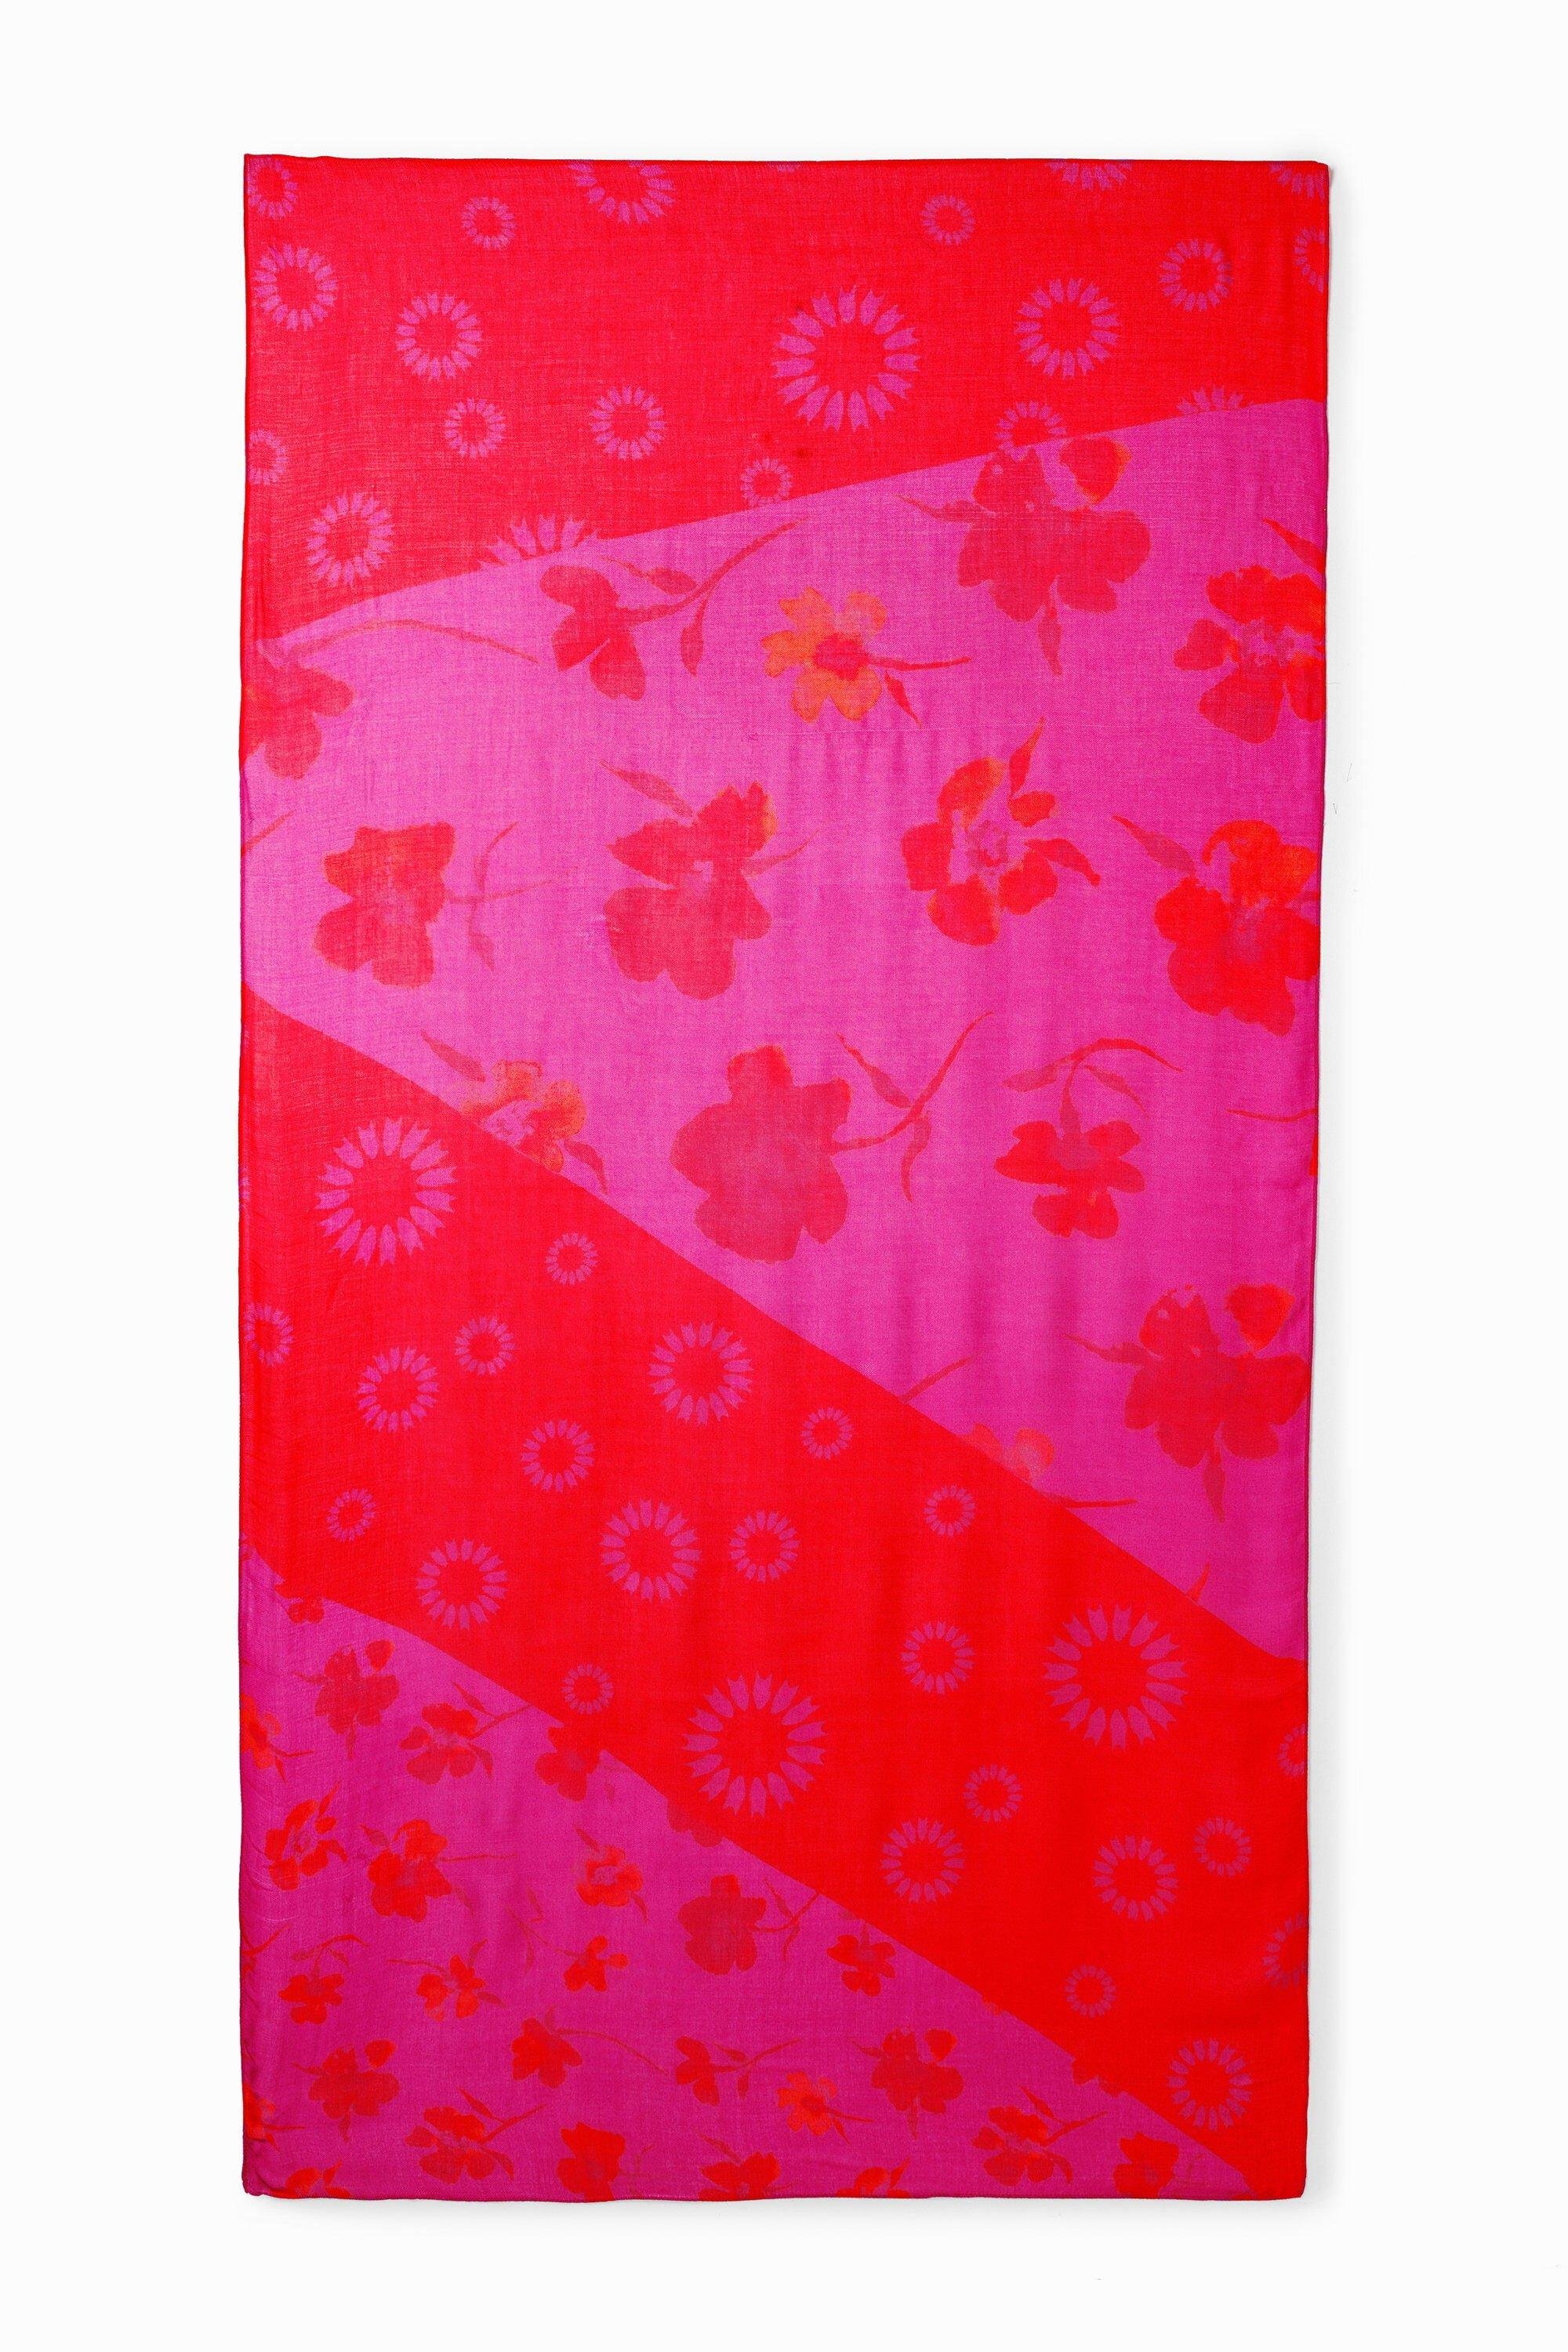 Rectangular floral foulard by DESIGUAL